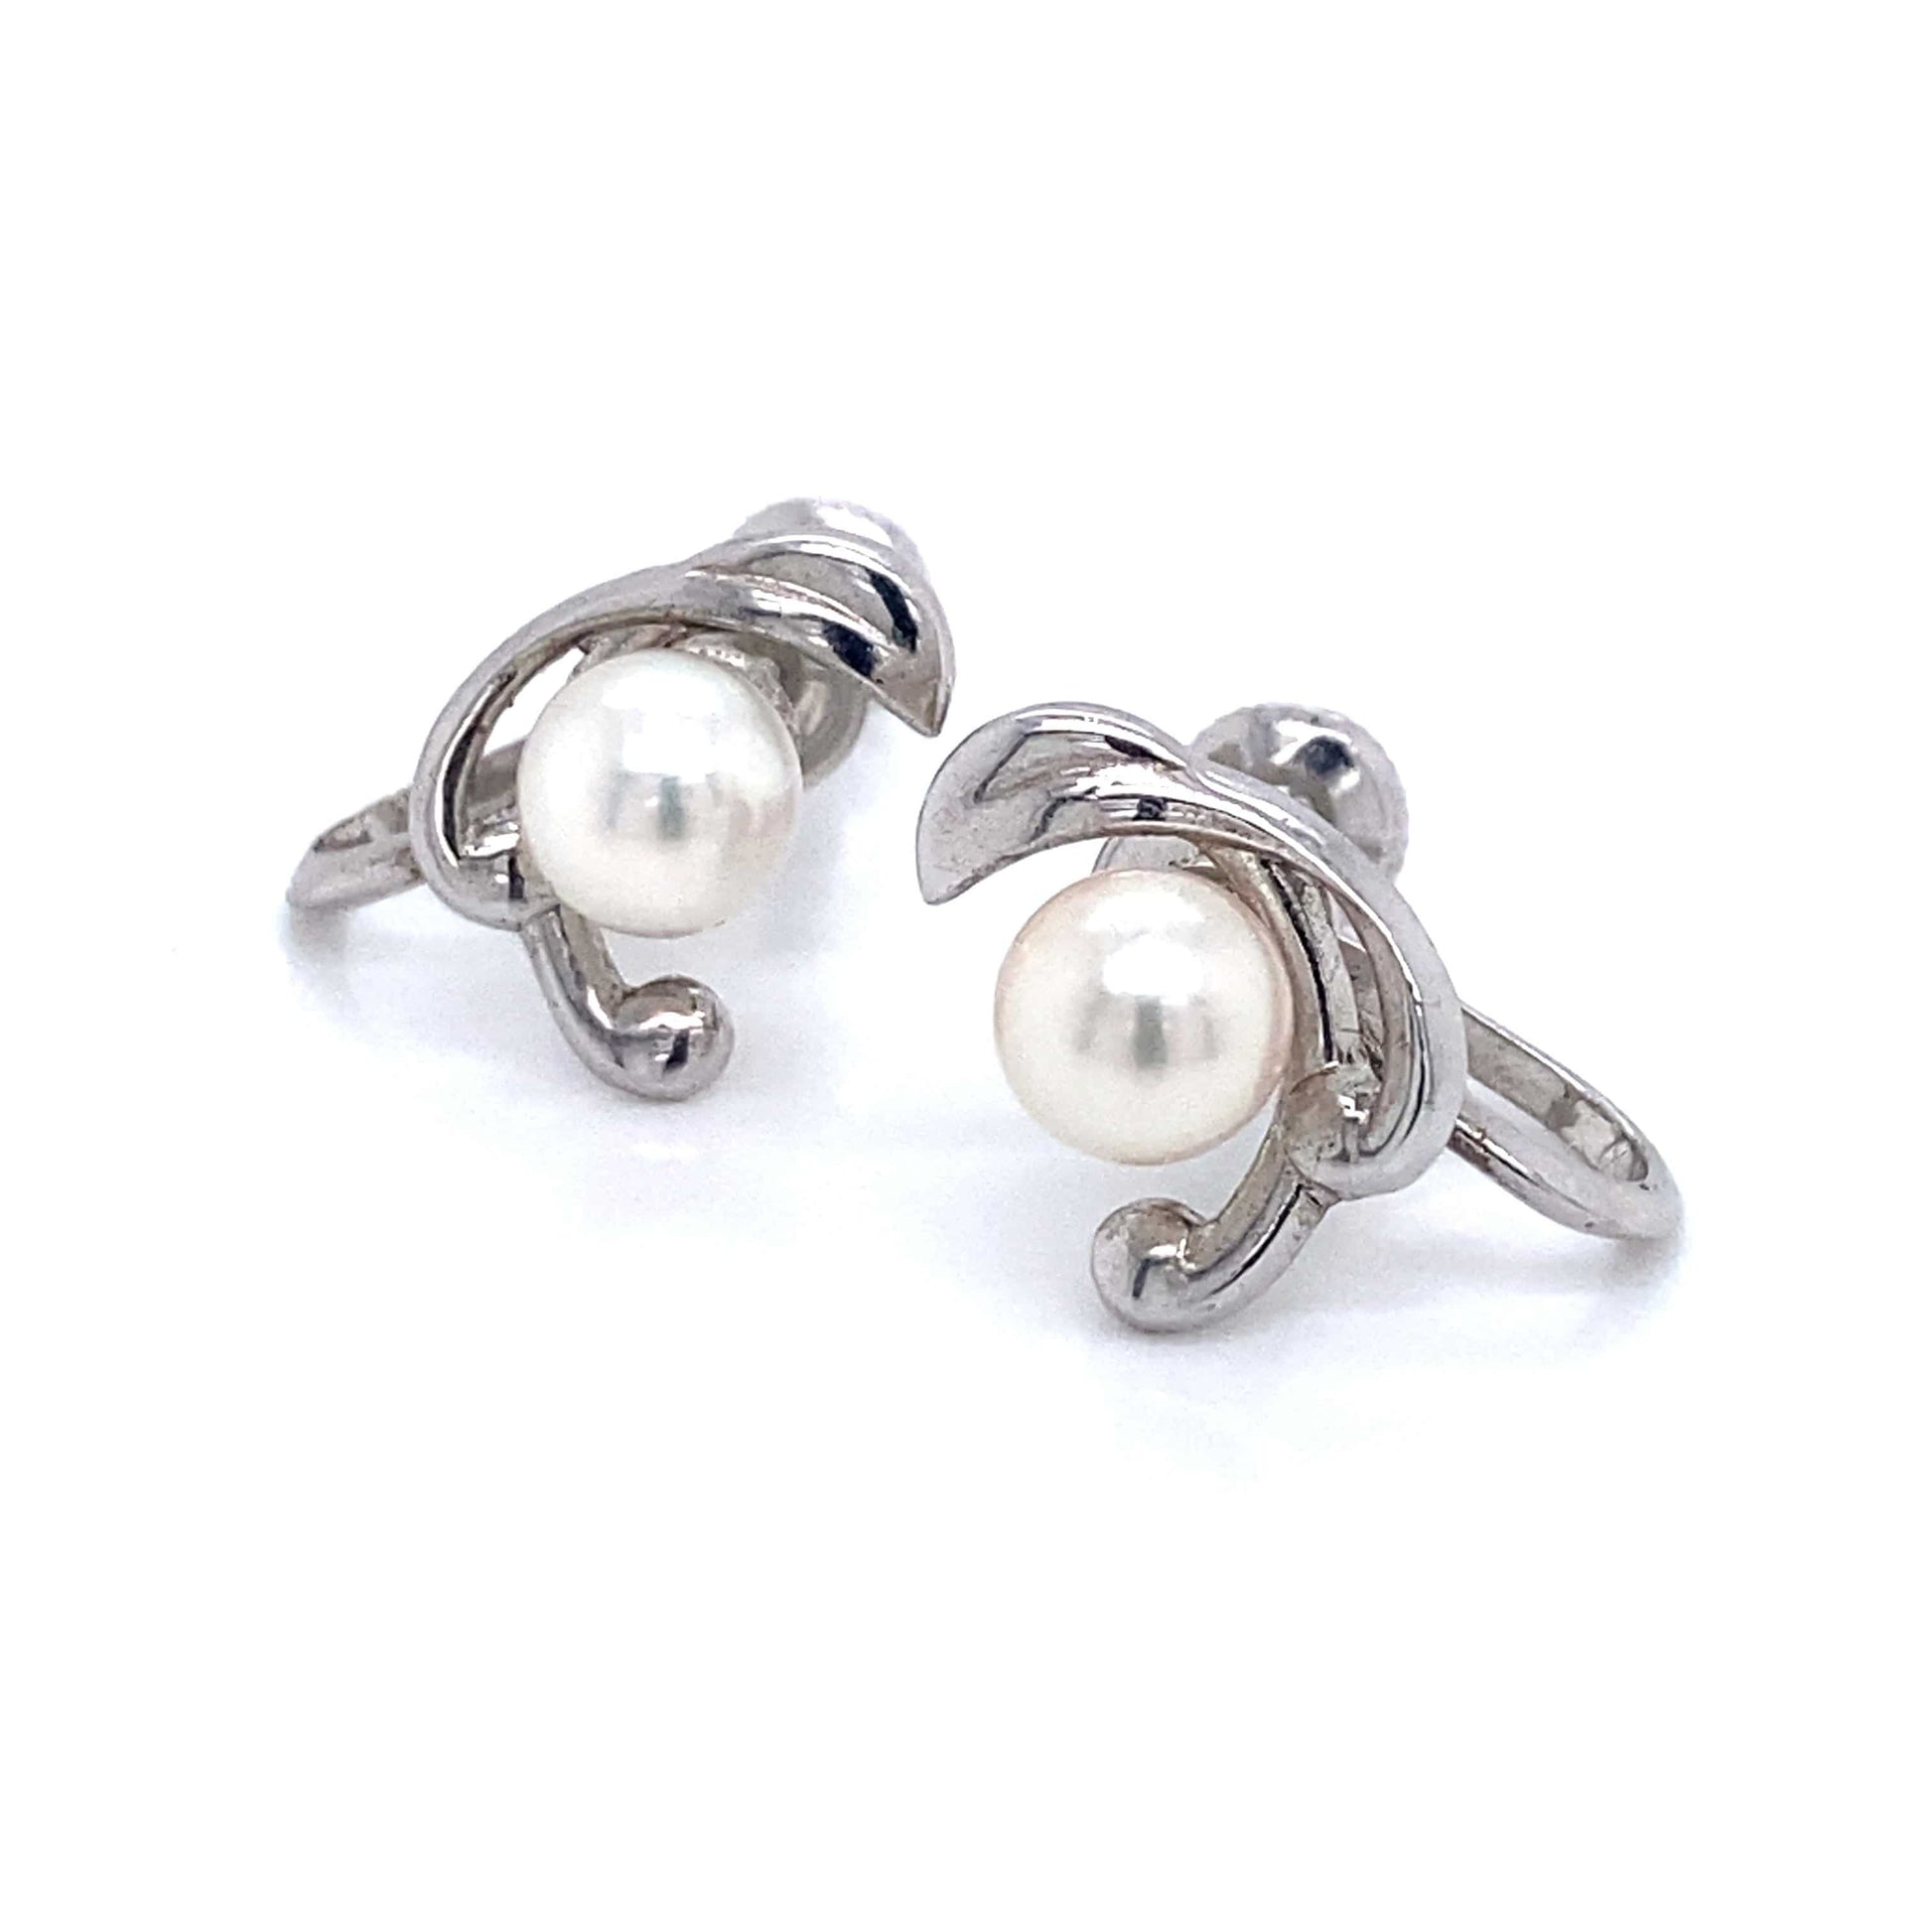 Mikimoto Estate Akoya Pearl Clip On Earrings Sterling Silver 6mm 3.53 Grams M173 - Certified Fine Jewelry